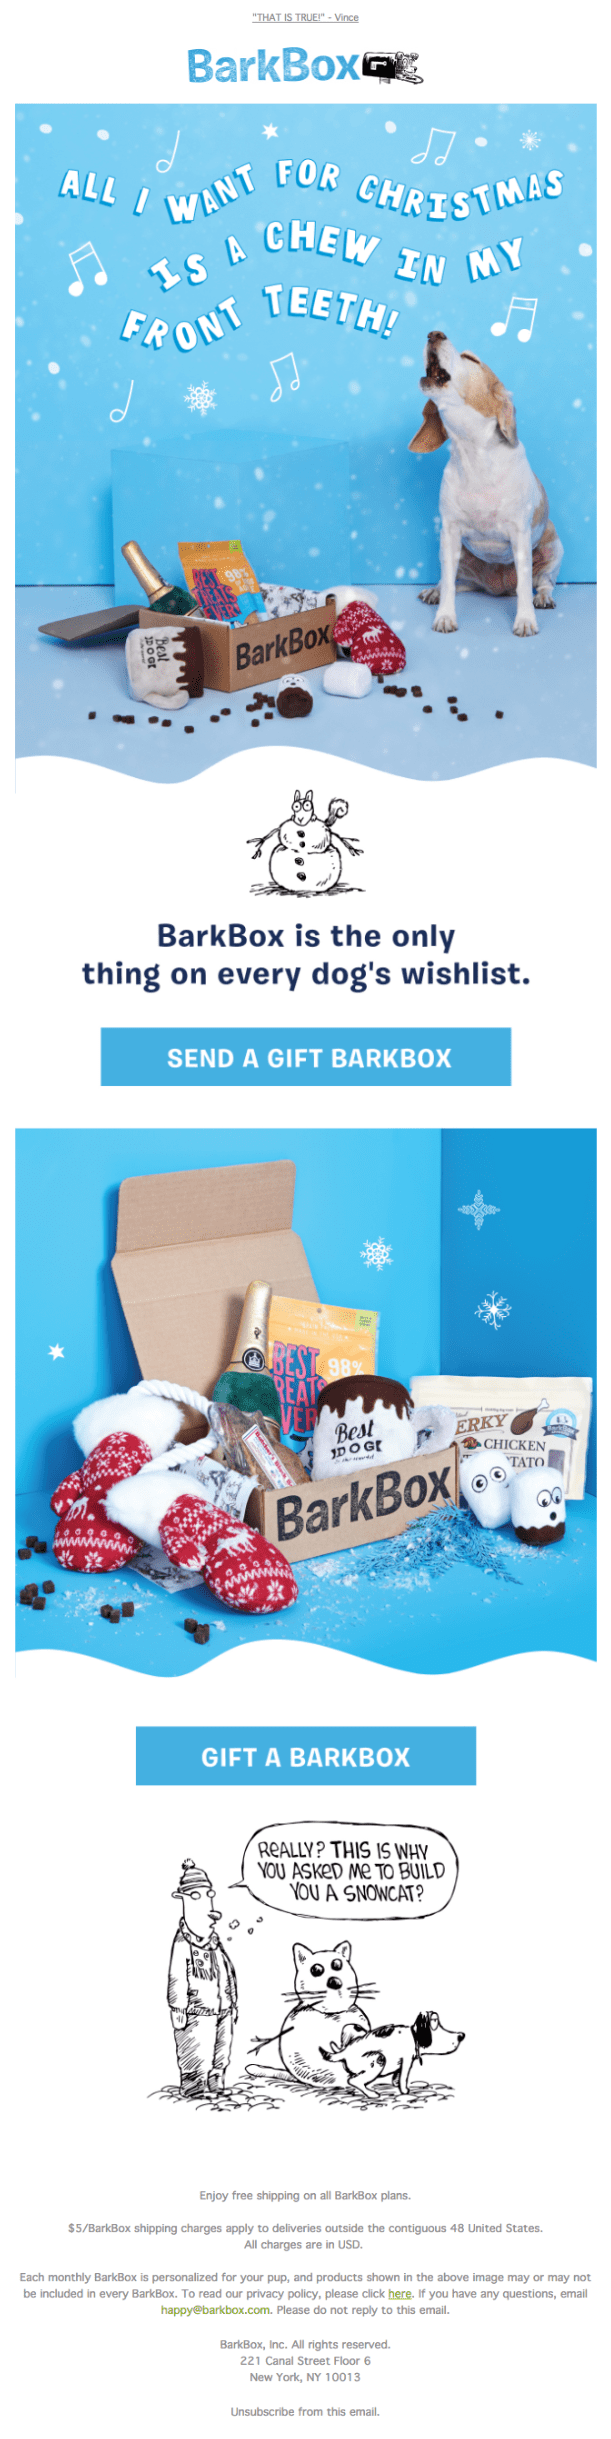 Christmas newsletter by BarkBox that uses festive humor